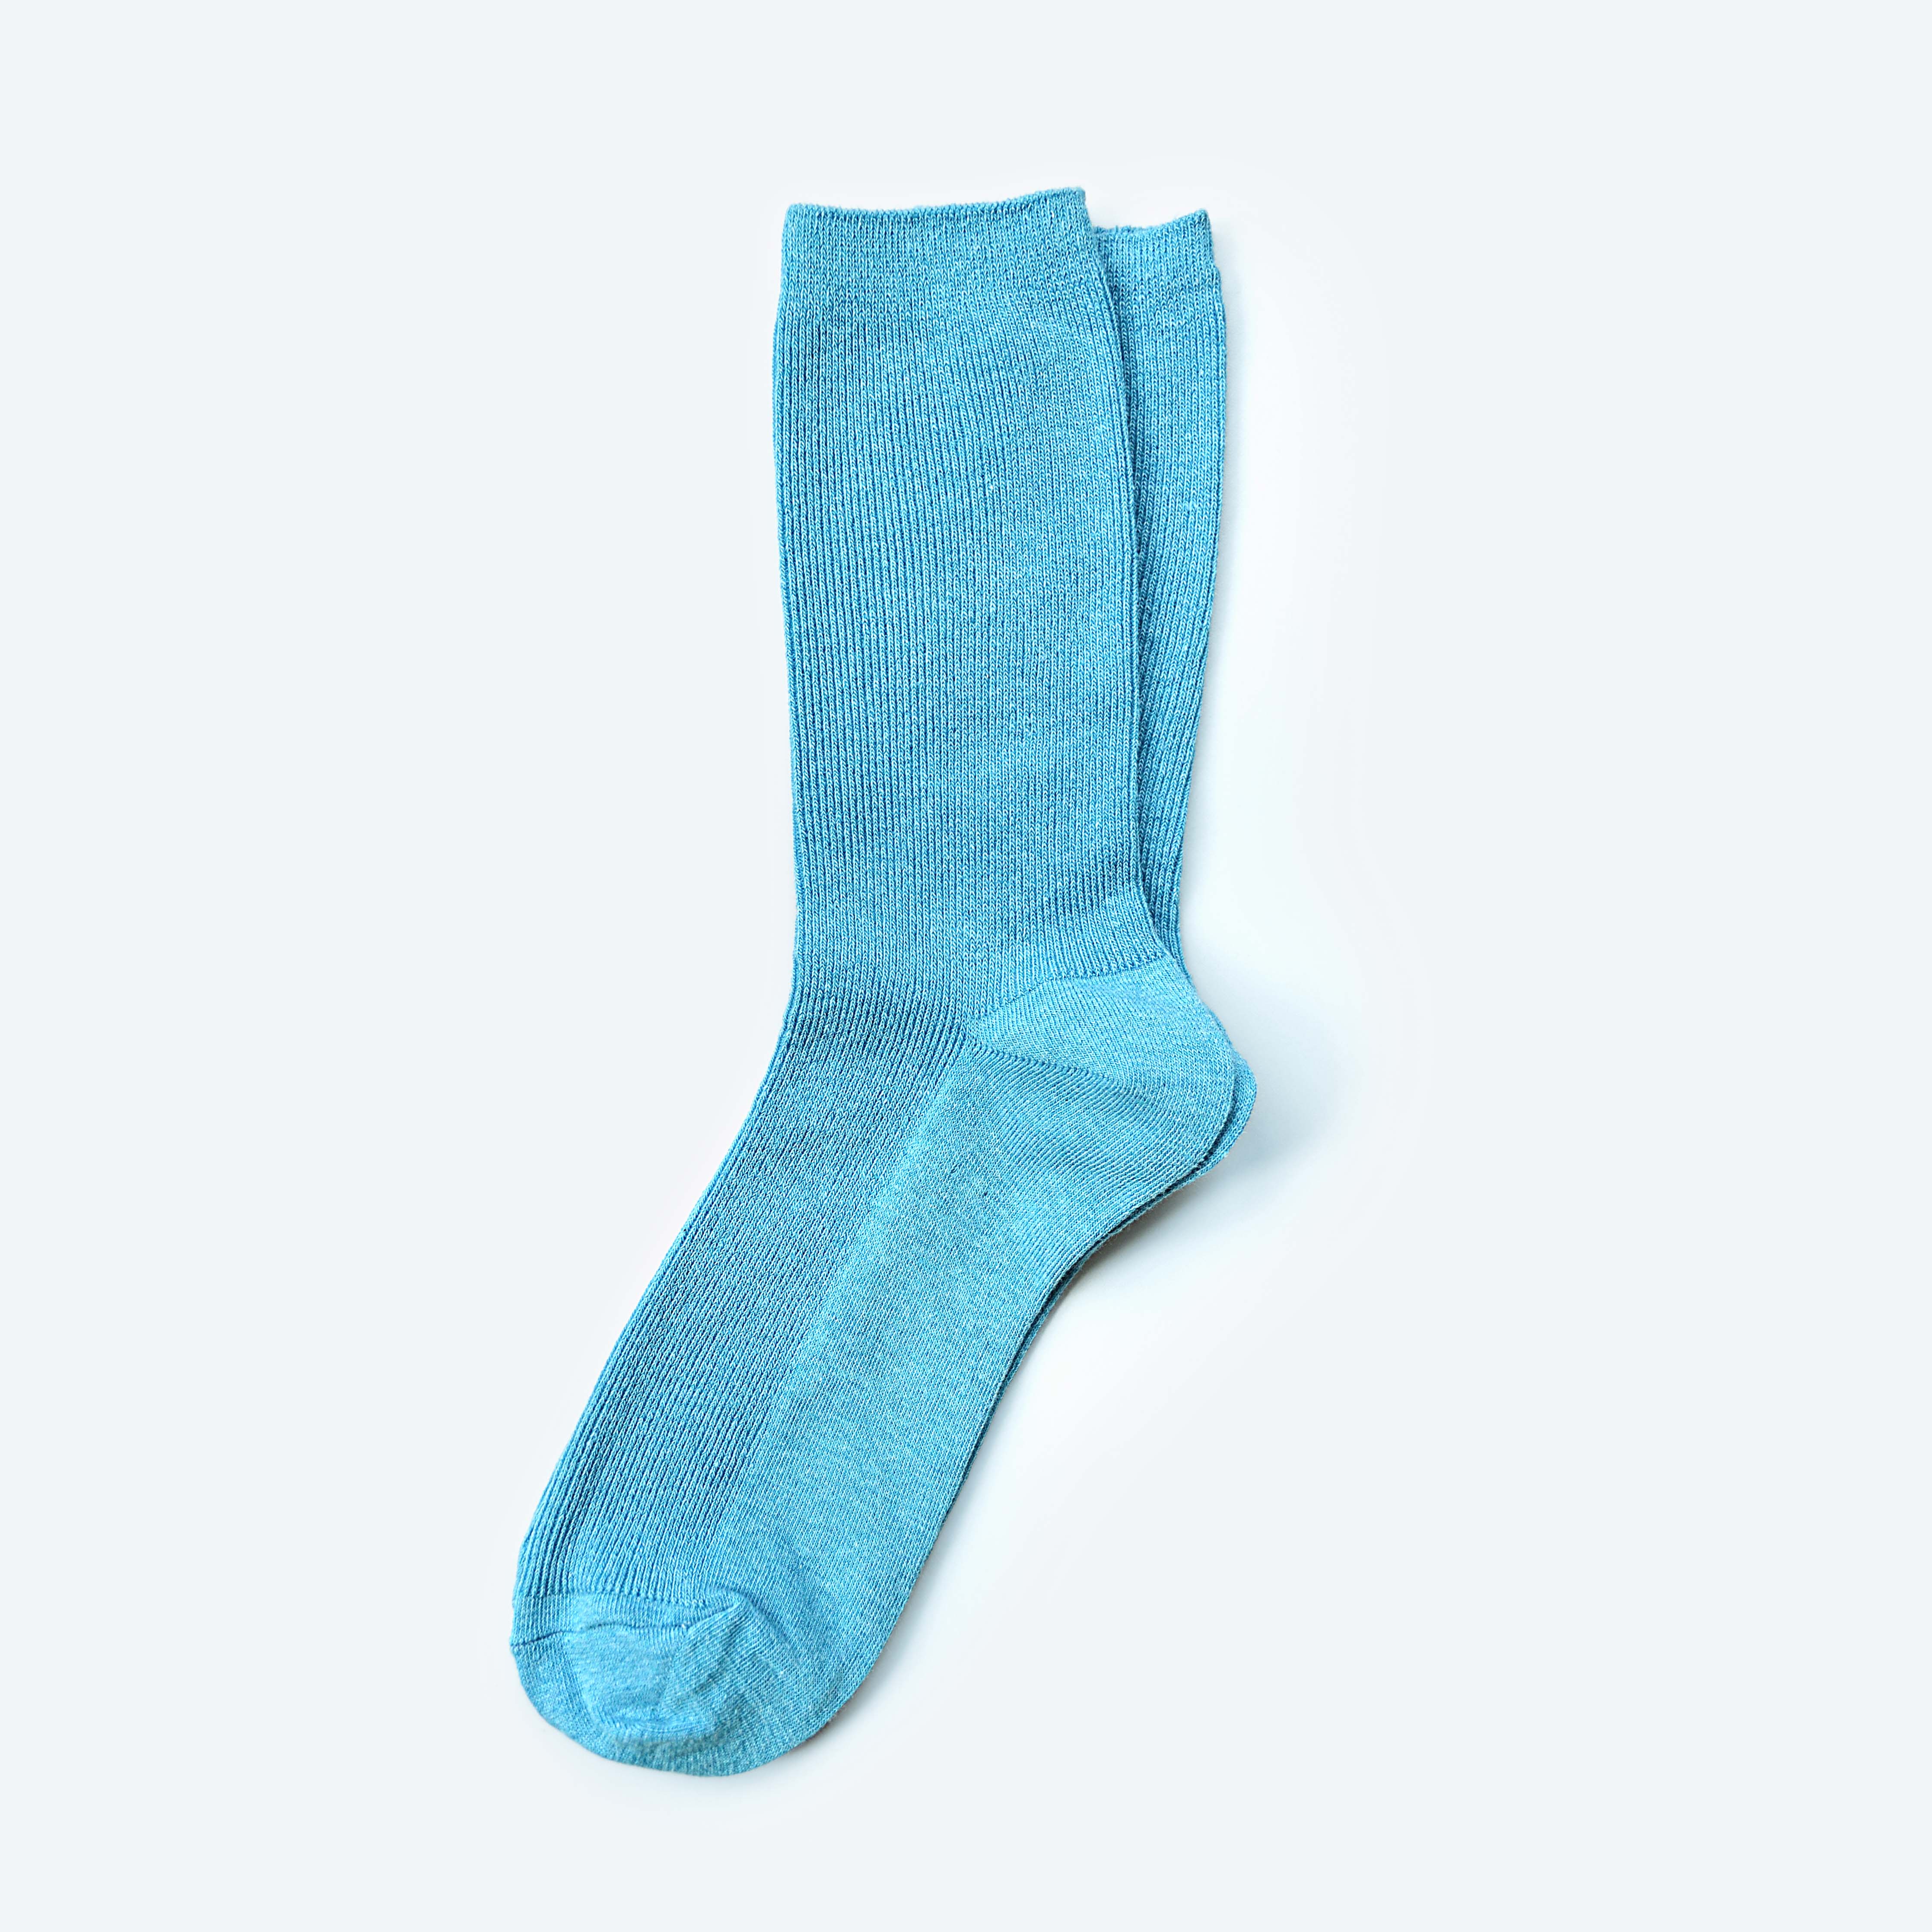 Hooray Sock Co.&#39;s Sky Crew Socks: Everyday comfort in Sky Blue. Unisex design, shorter crew length. 80% cotton, 20% spandex. Made in South Korea. Size: Small (Women&#39;s 4-10). 